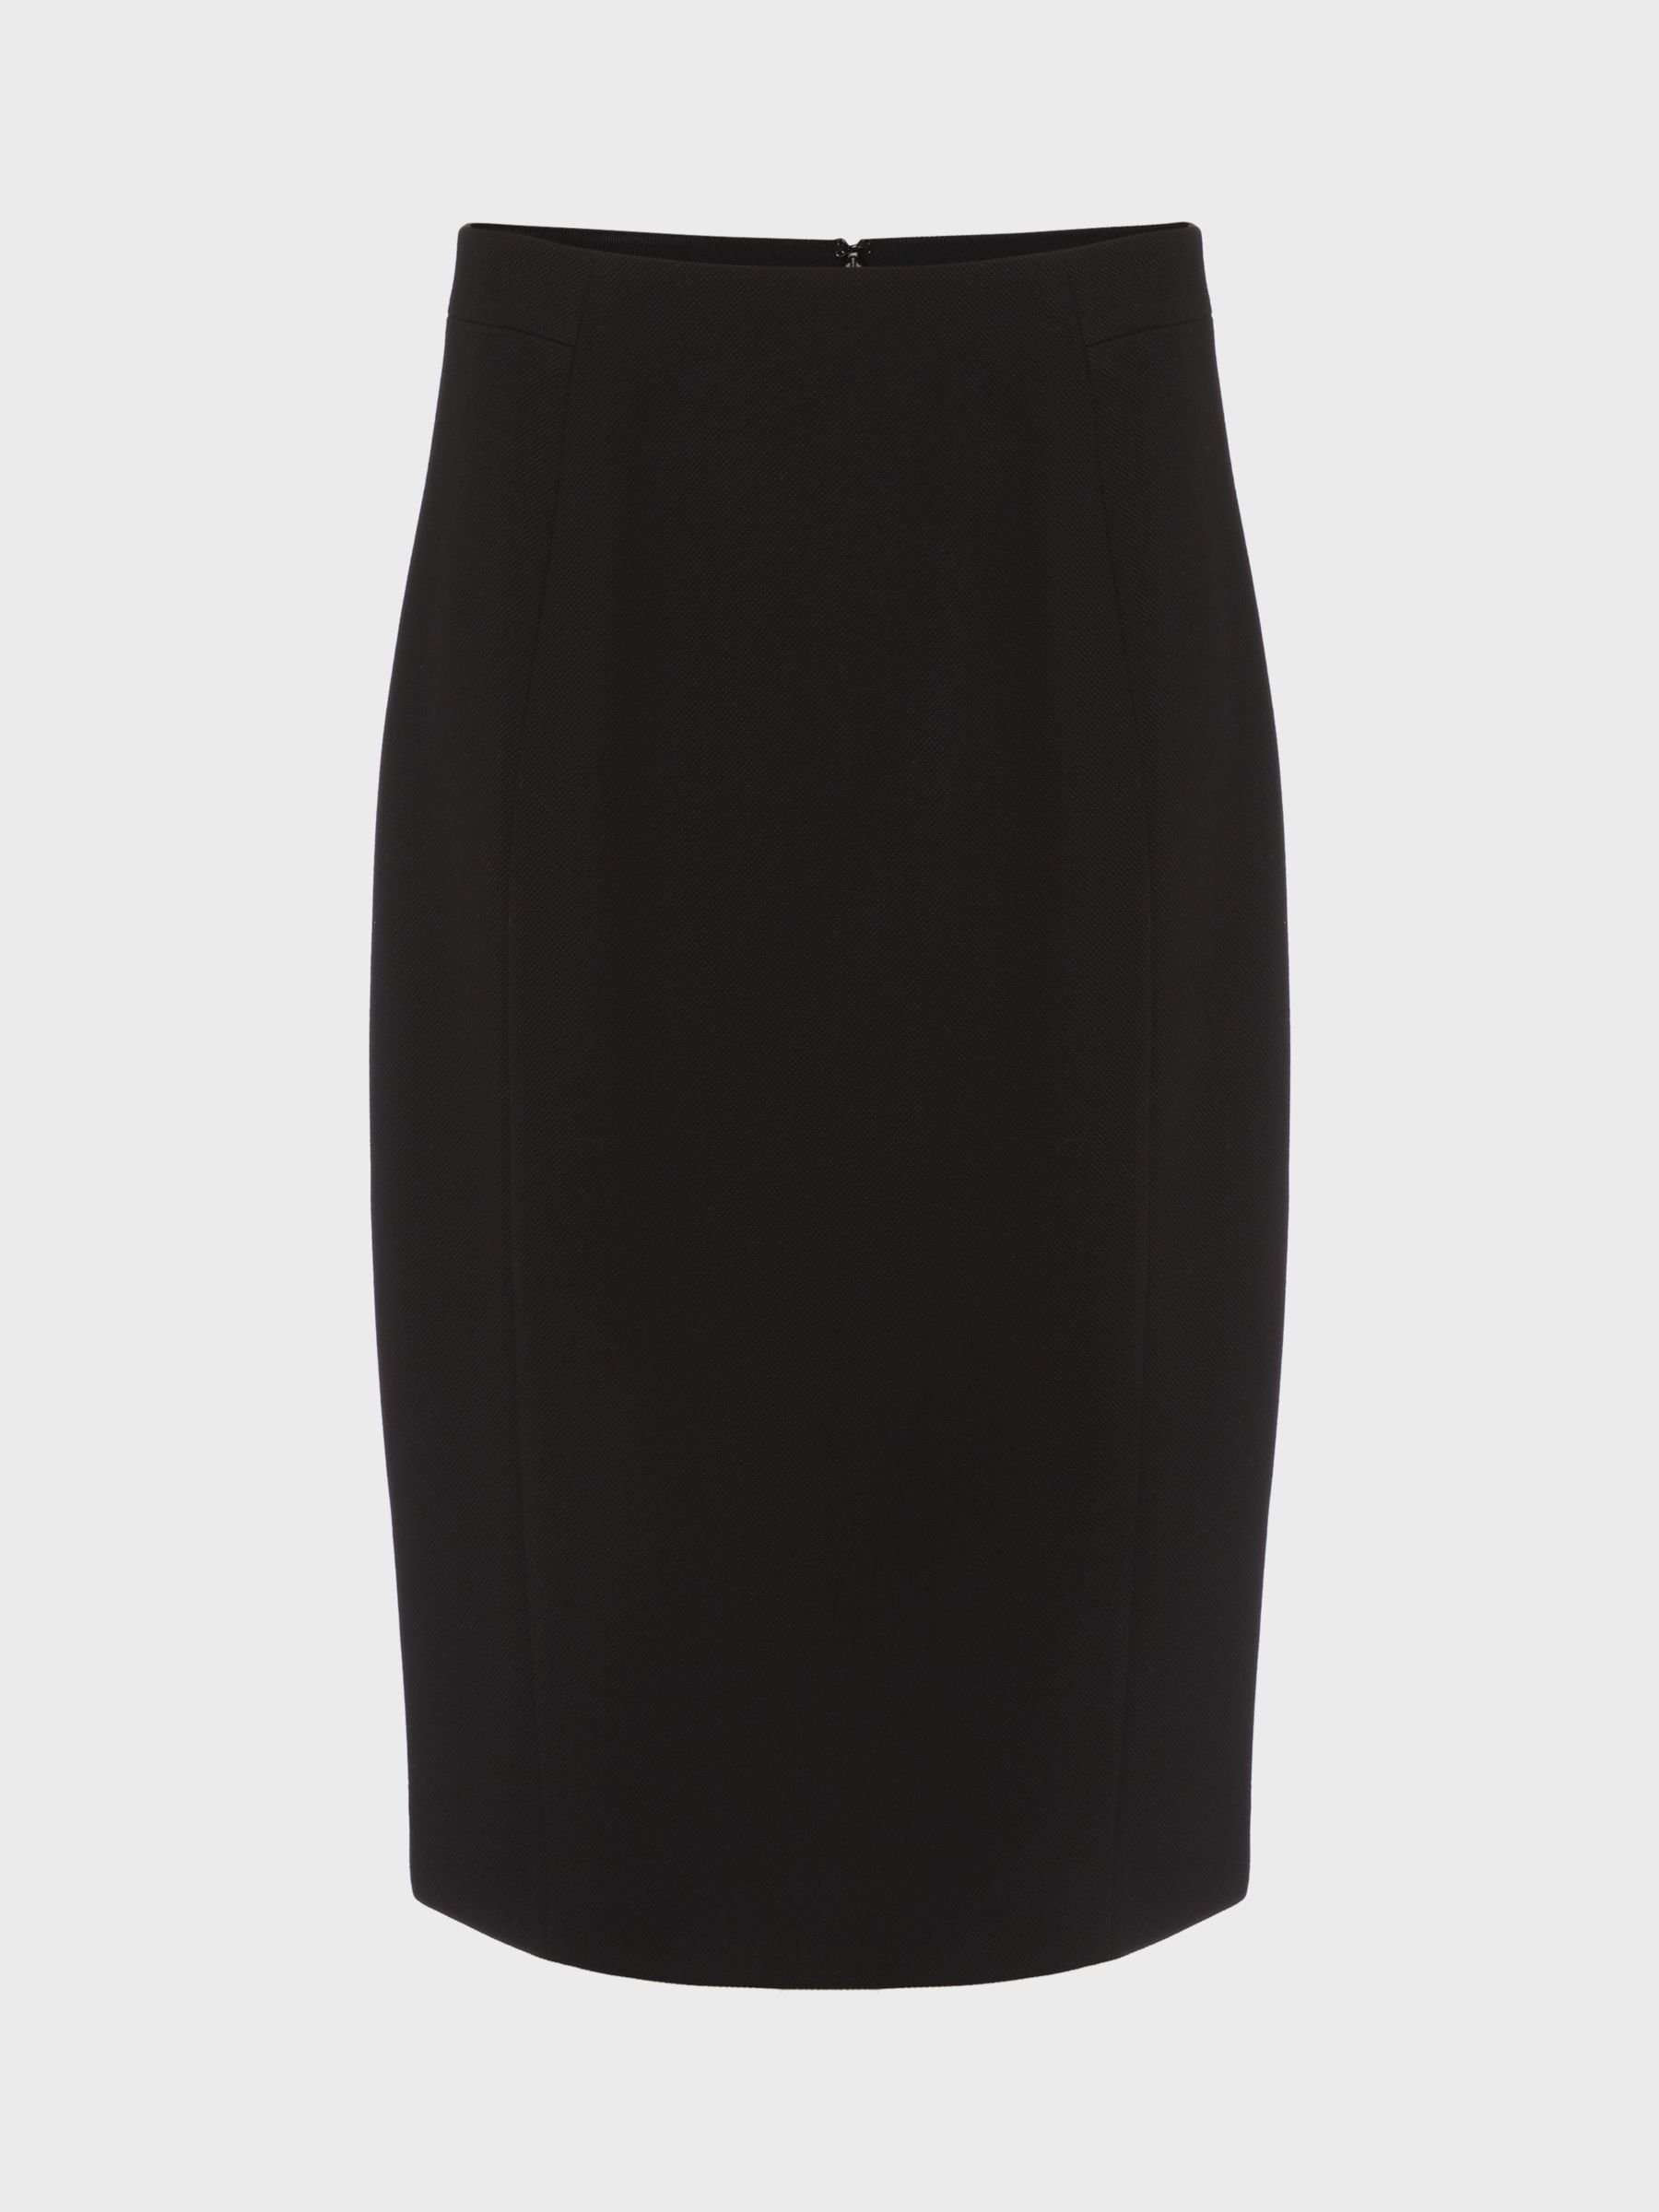 Hobbs Petite Ophelia Pencil Skirt, Black at John Lewis & Partners